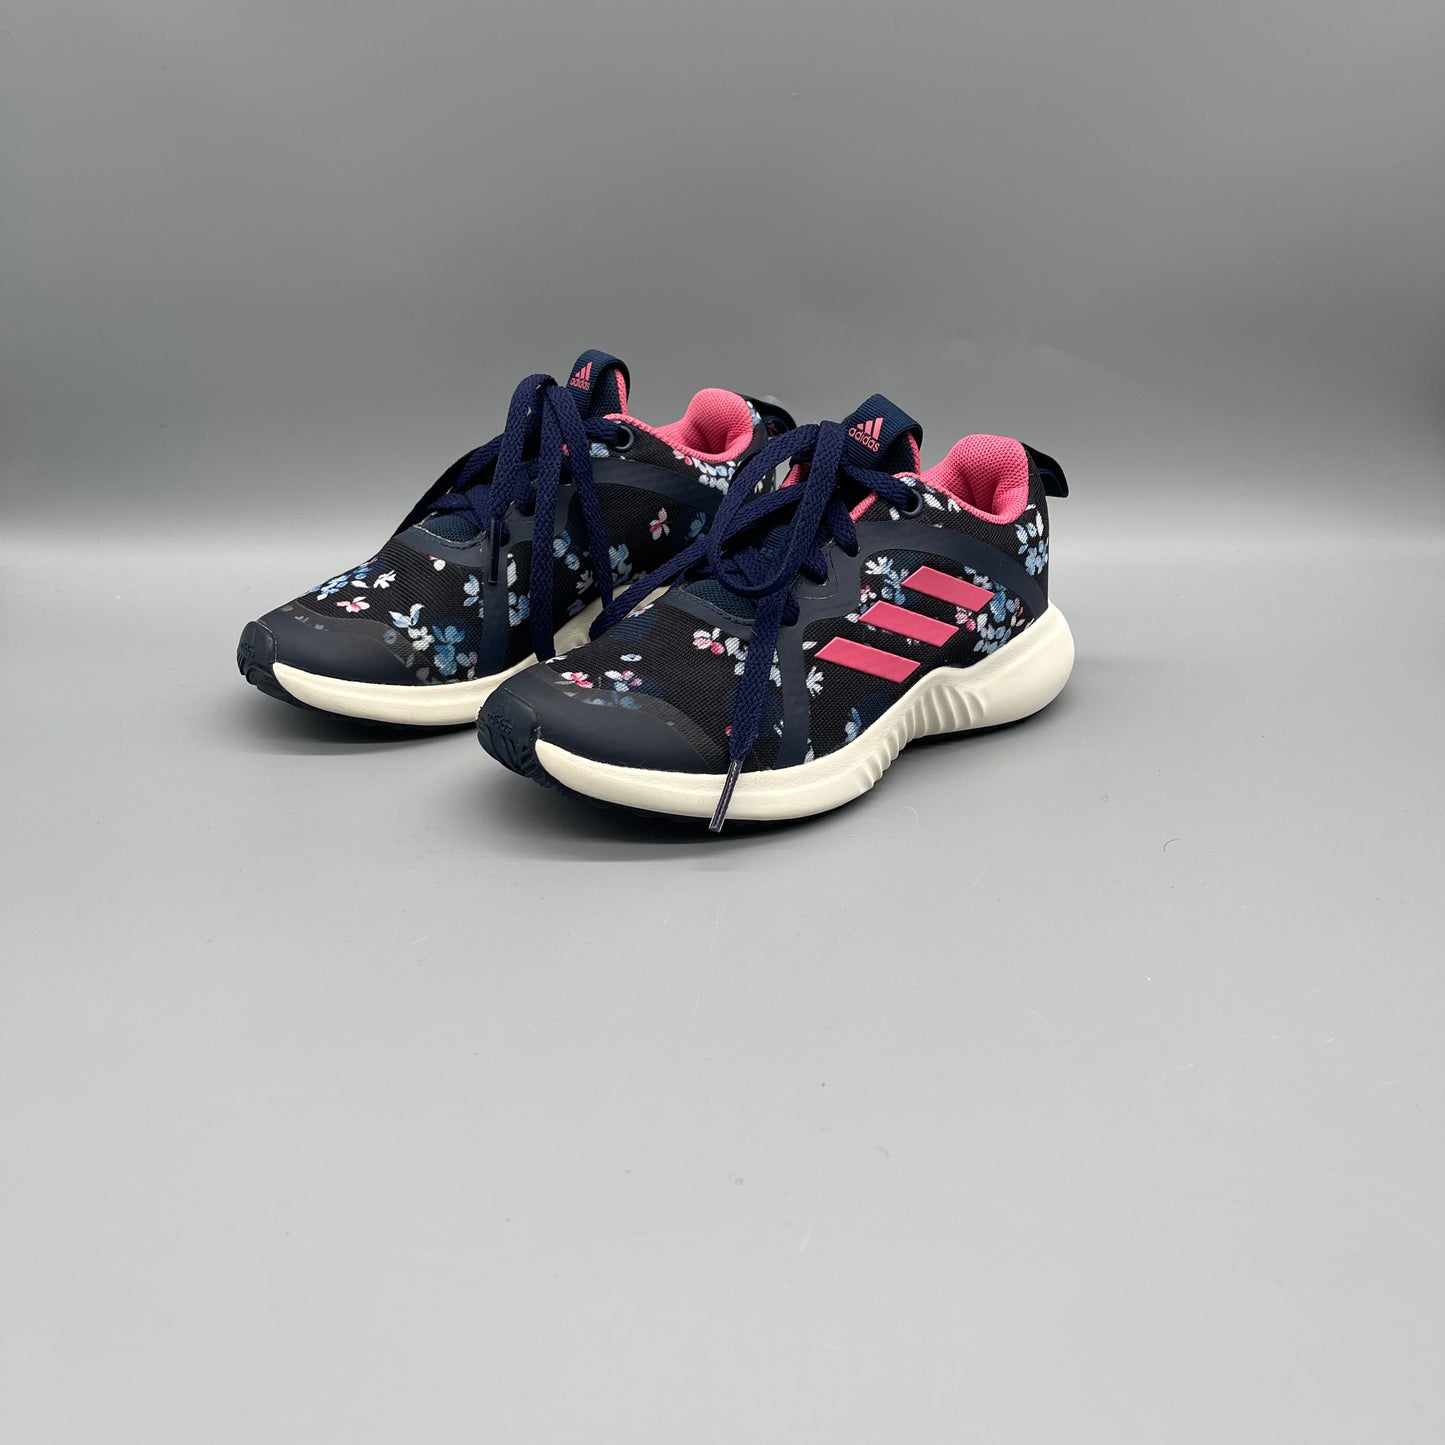 Adidas / Runner / US12